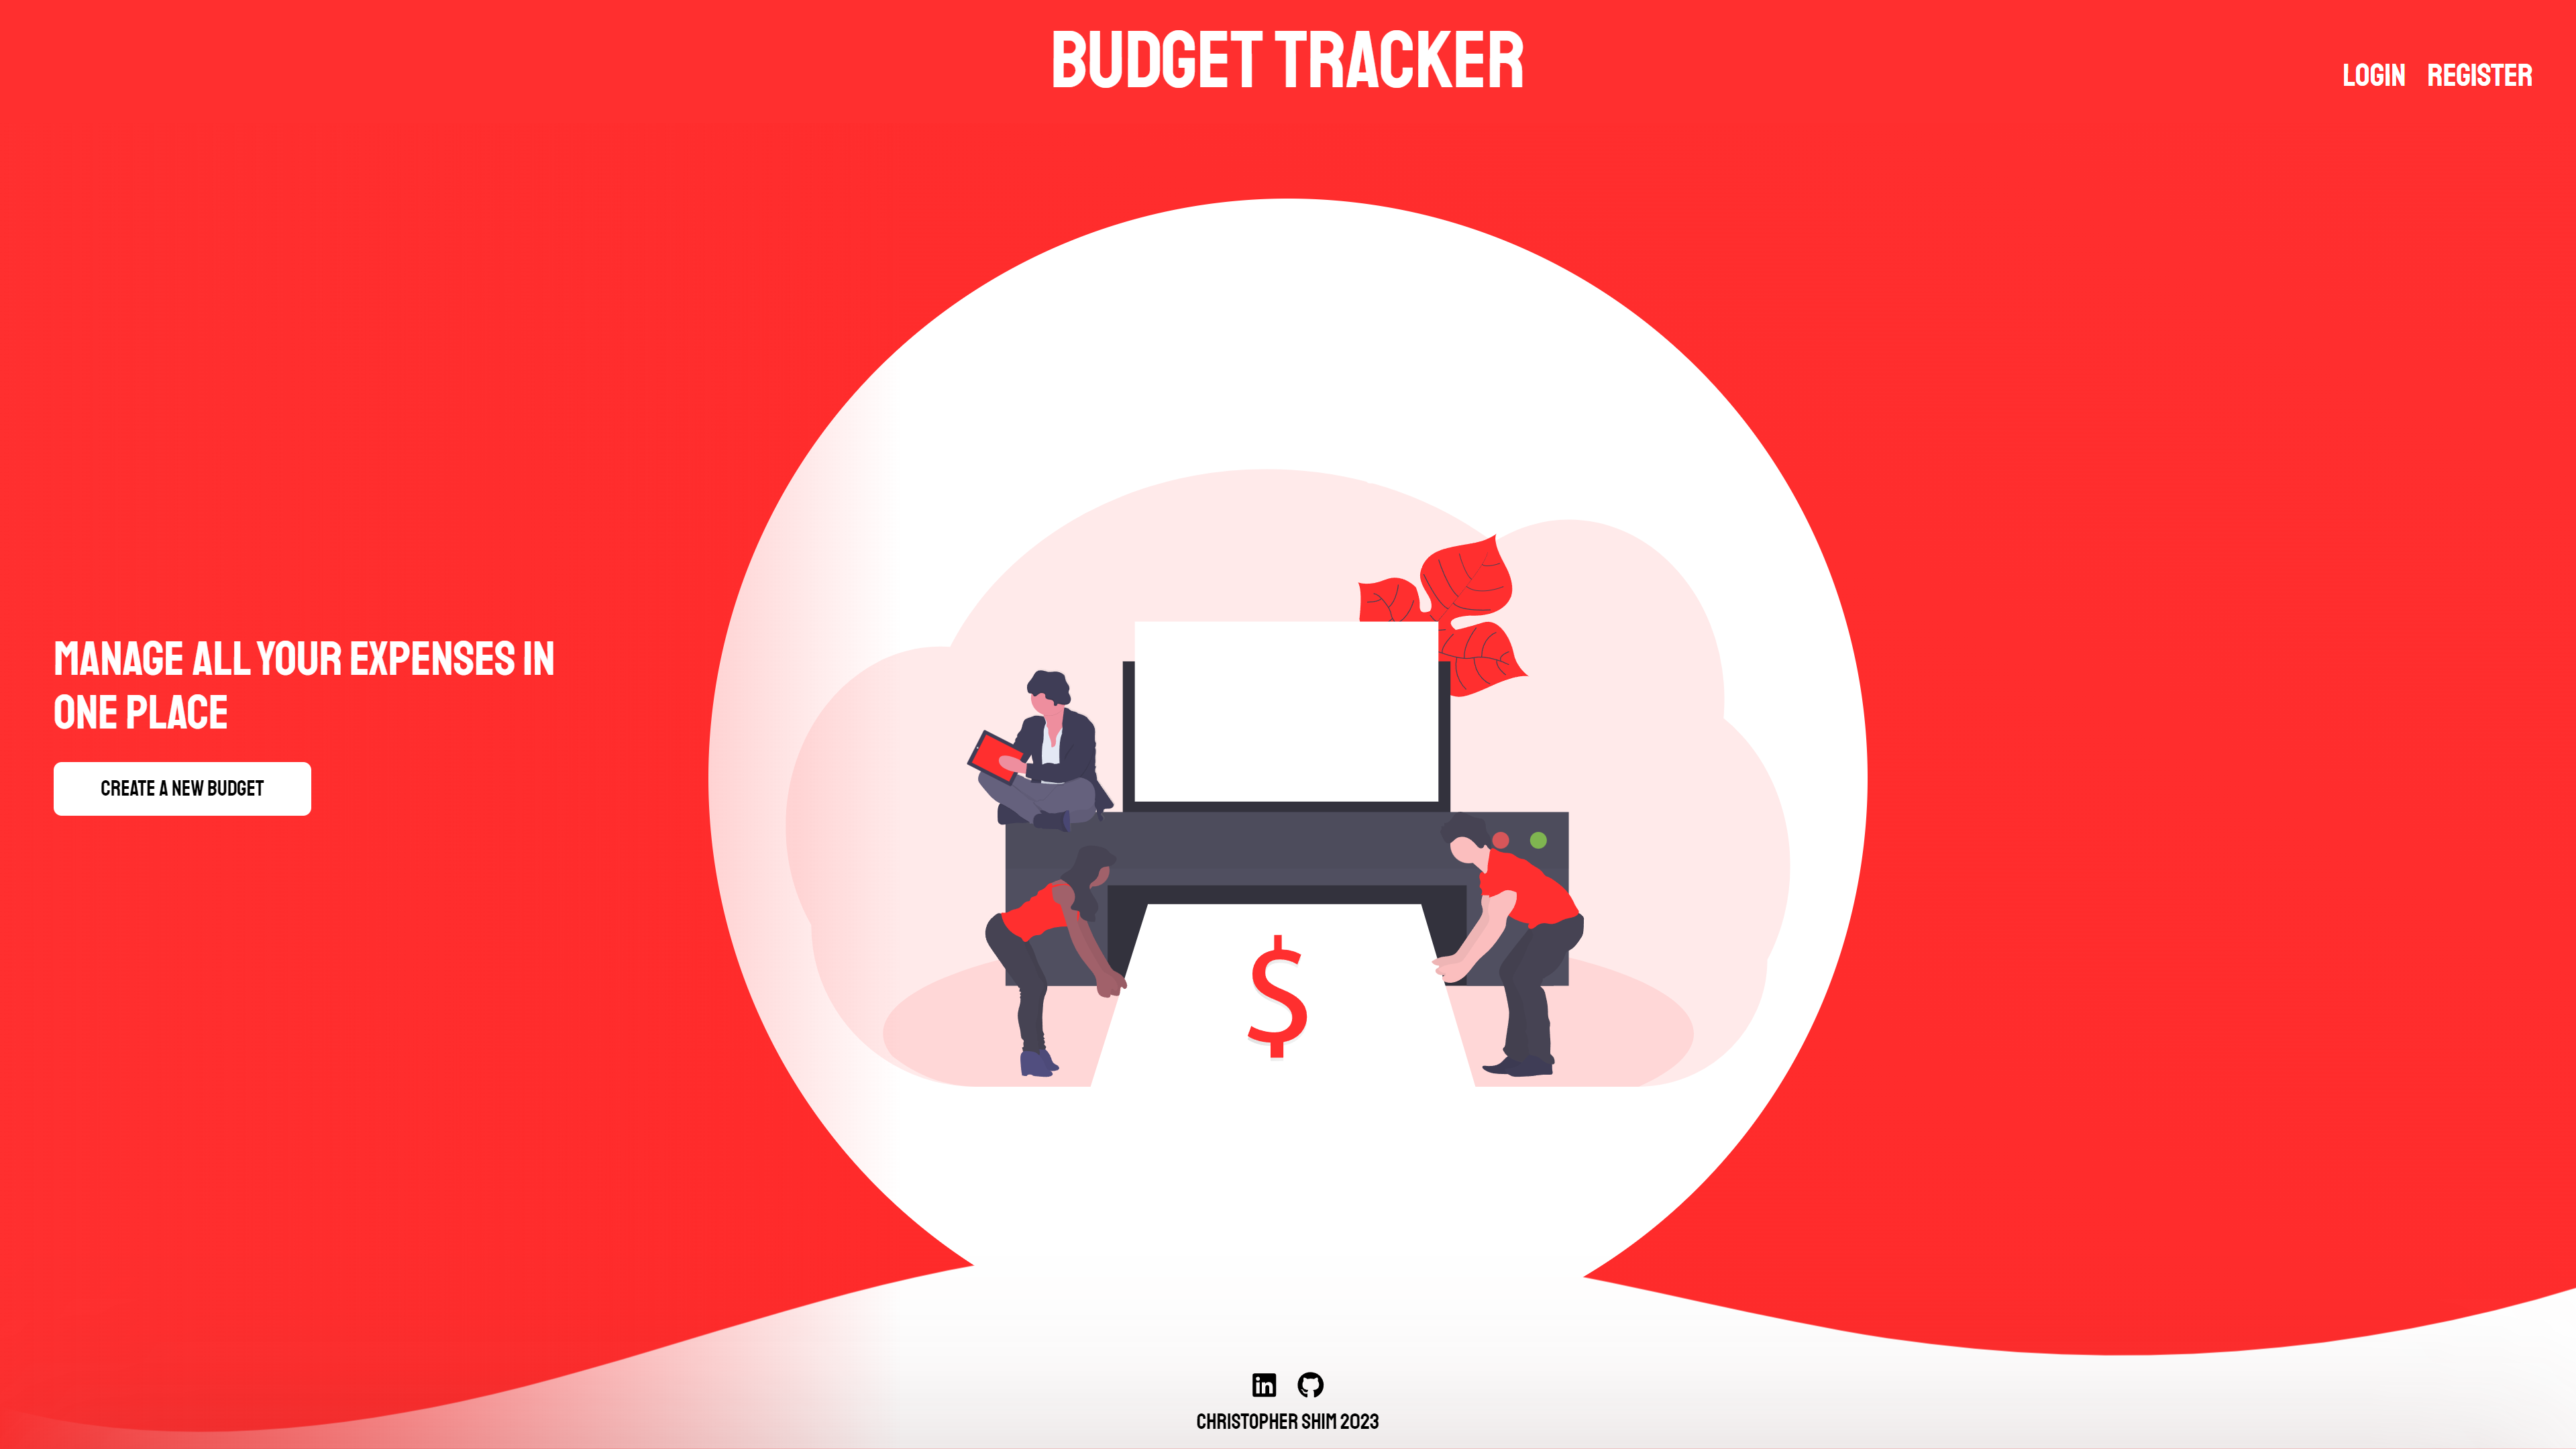 Budget Tracker - Web Application